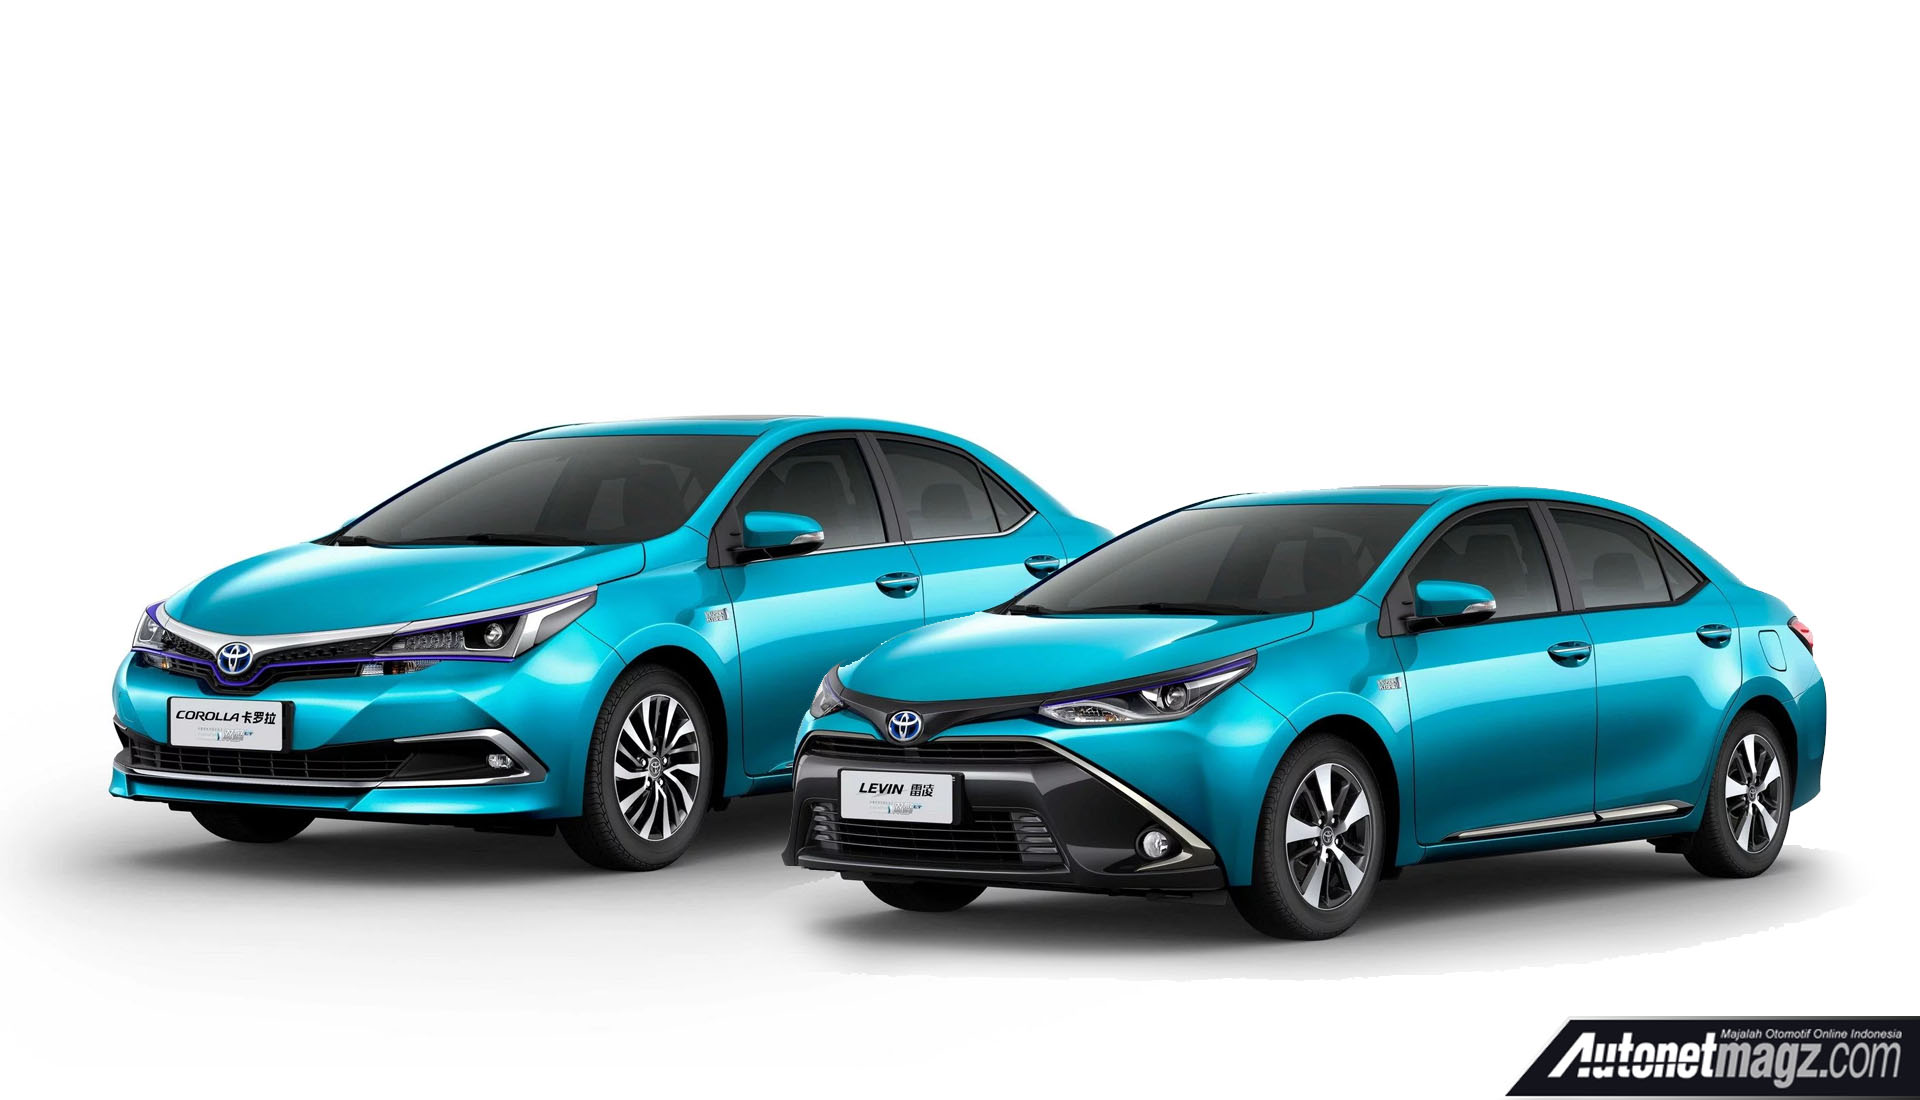 Berita, Toyota Corolla & Levin PHEV China: Toyota Perkenalkan Corolla PHEV & Levin PHEV di China